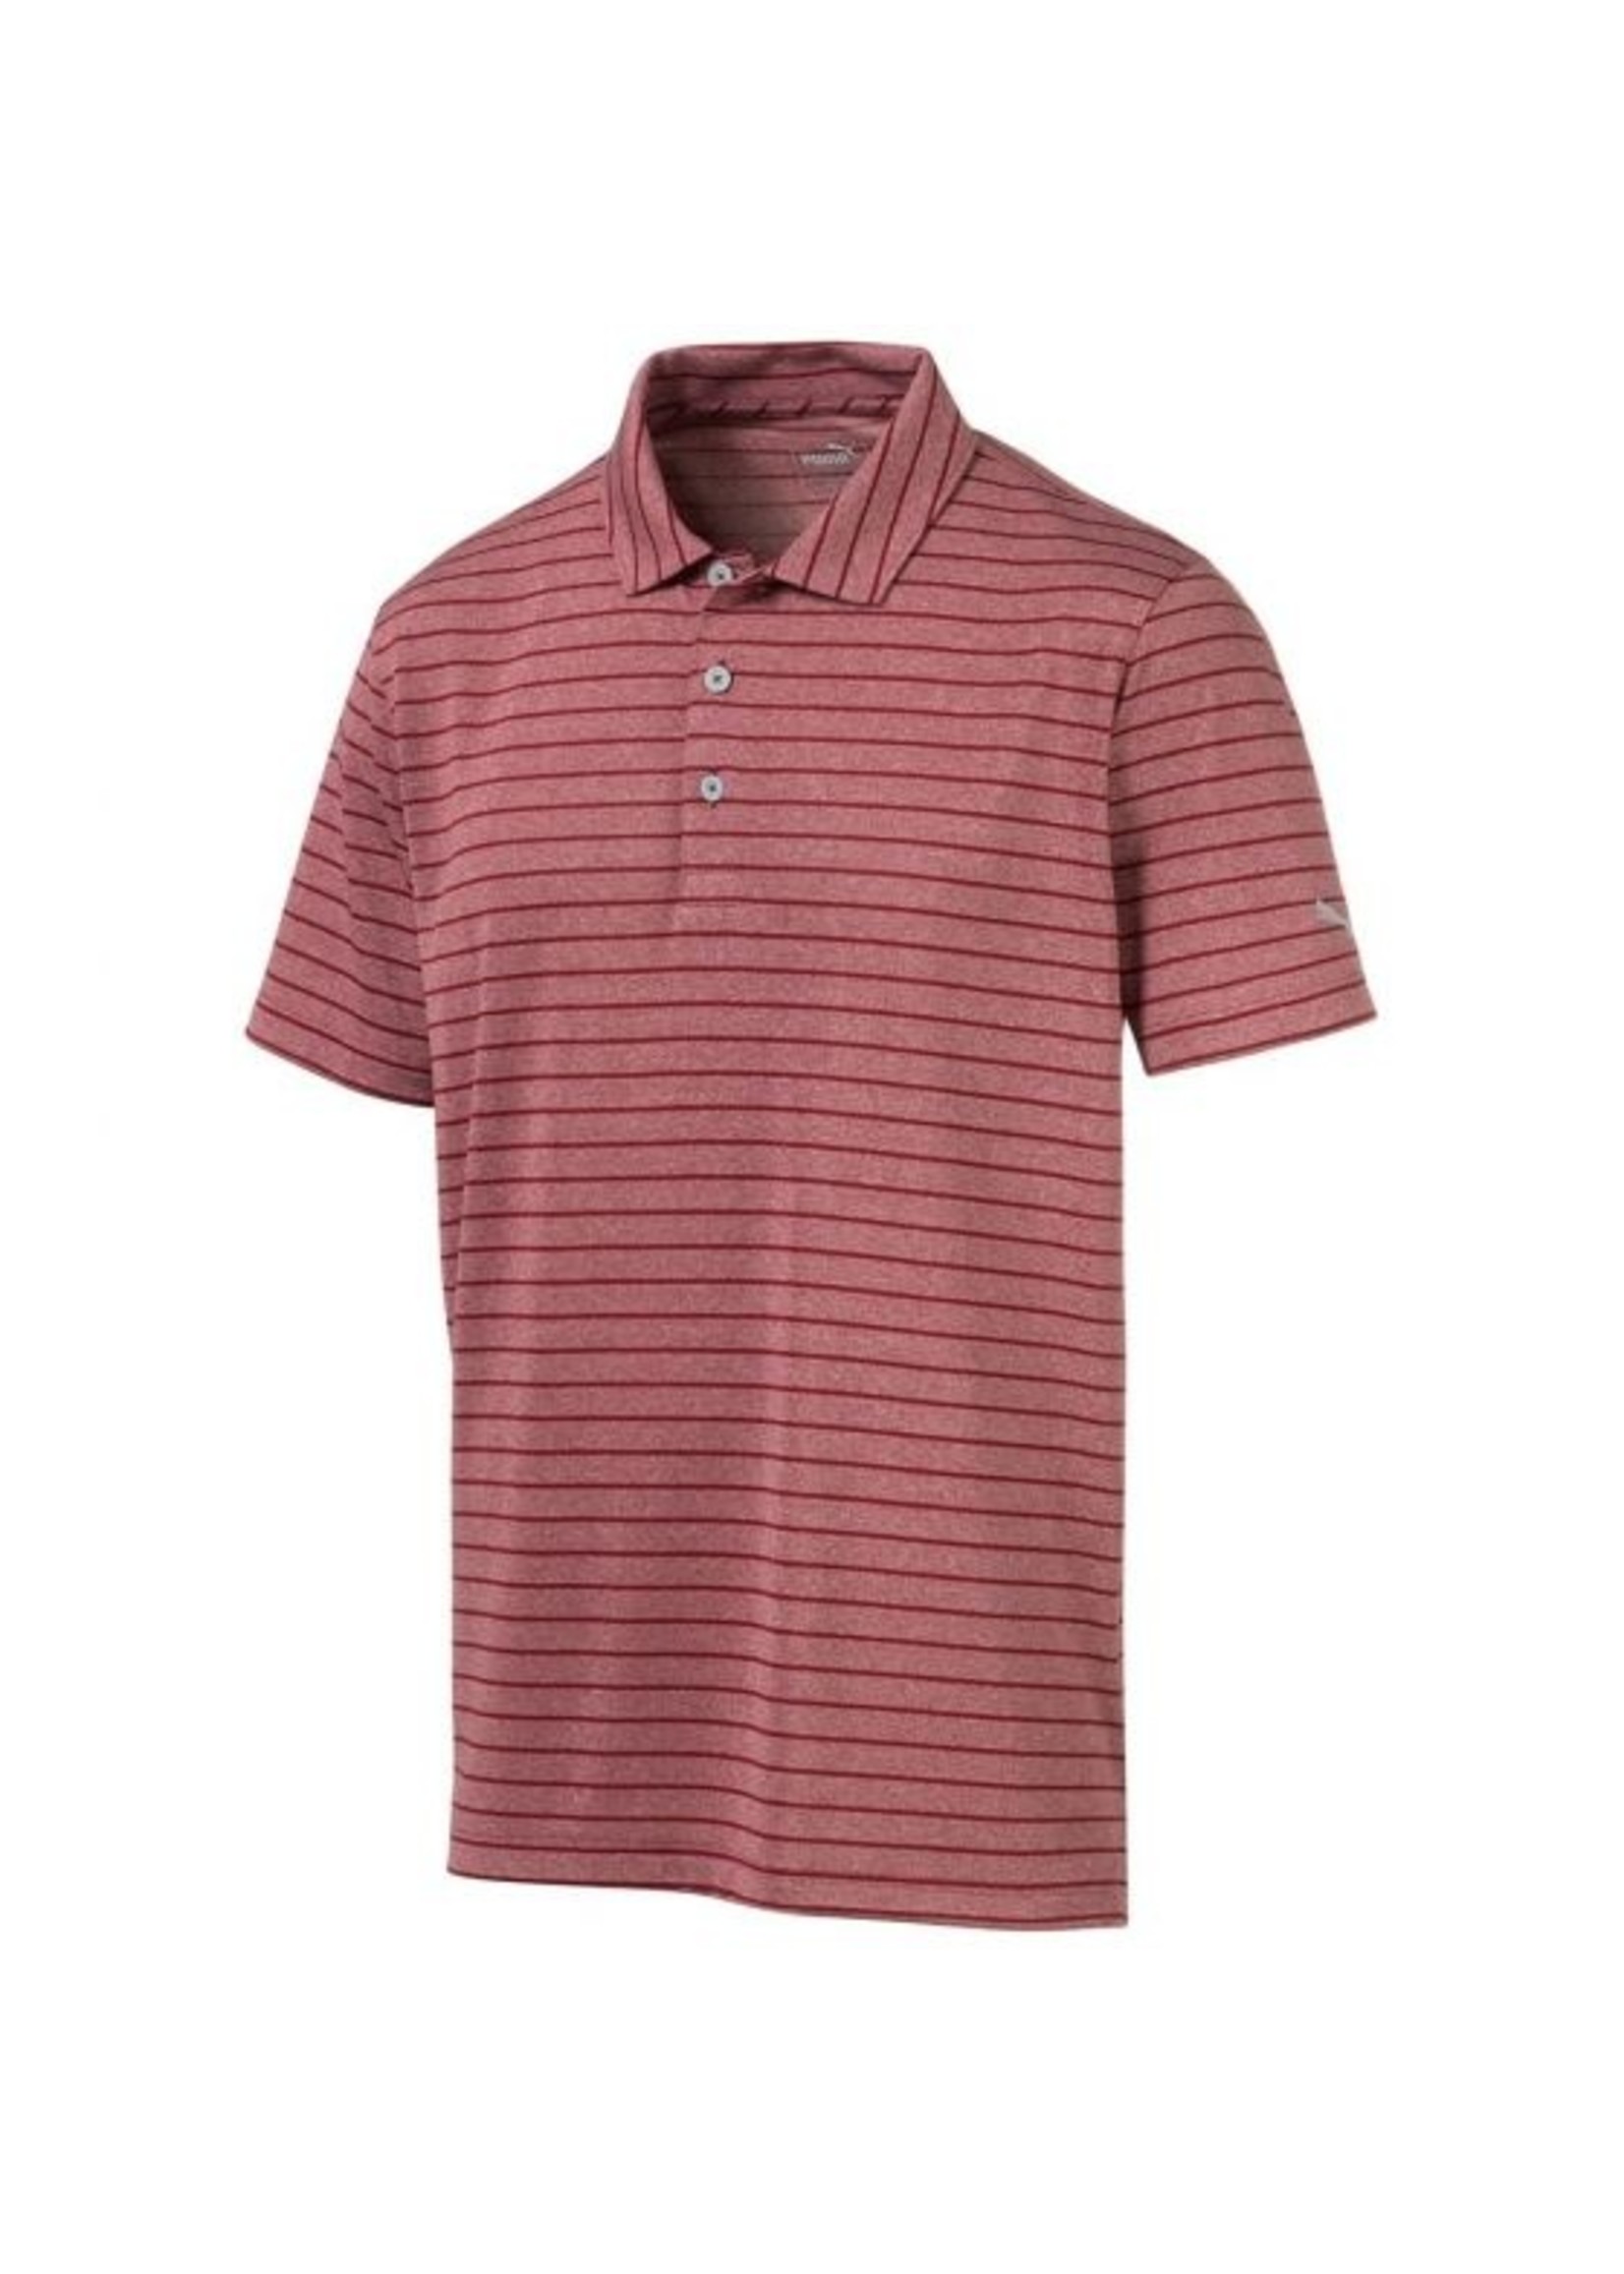 PUMA KINGSWELL GLEN Rotation Stripe Golf Shirt Mens